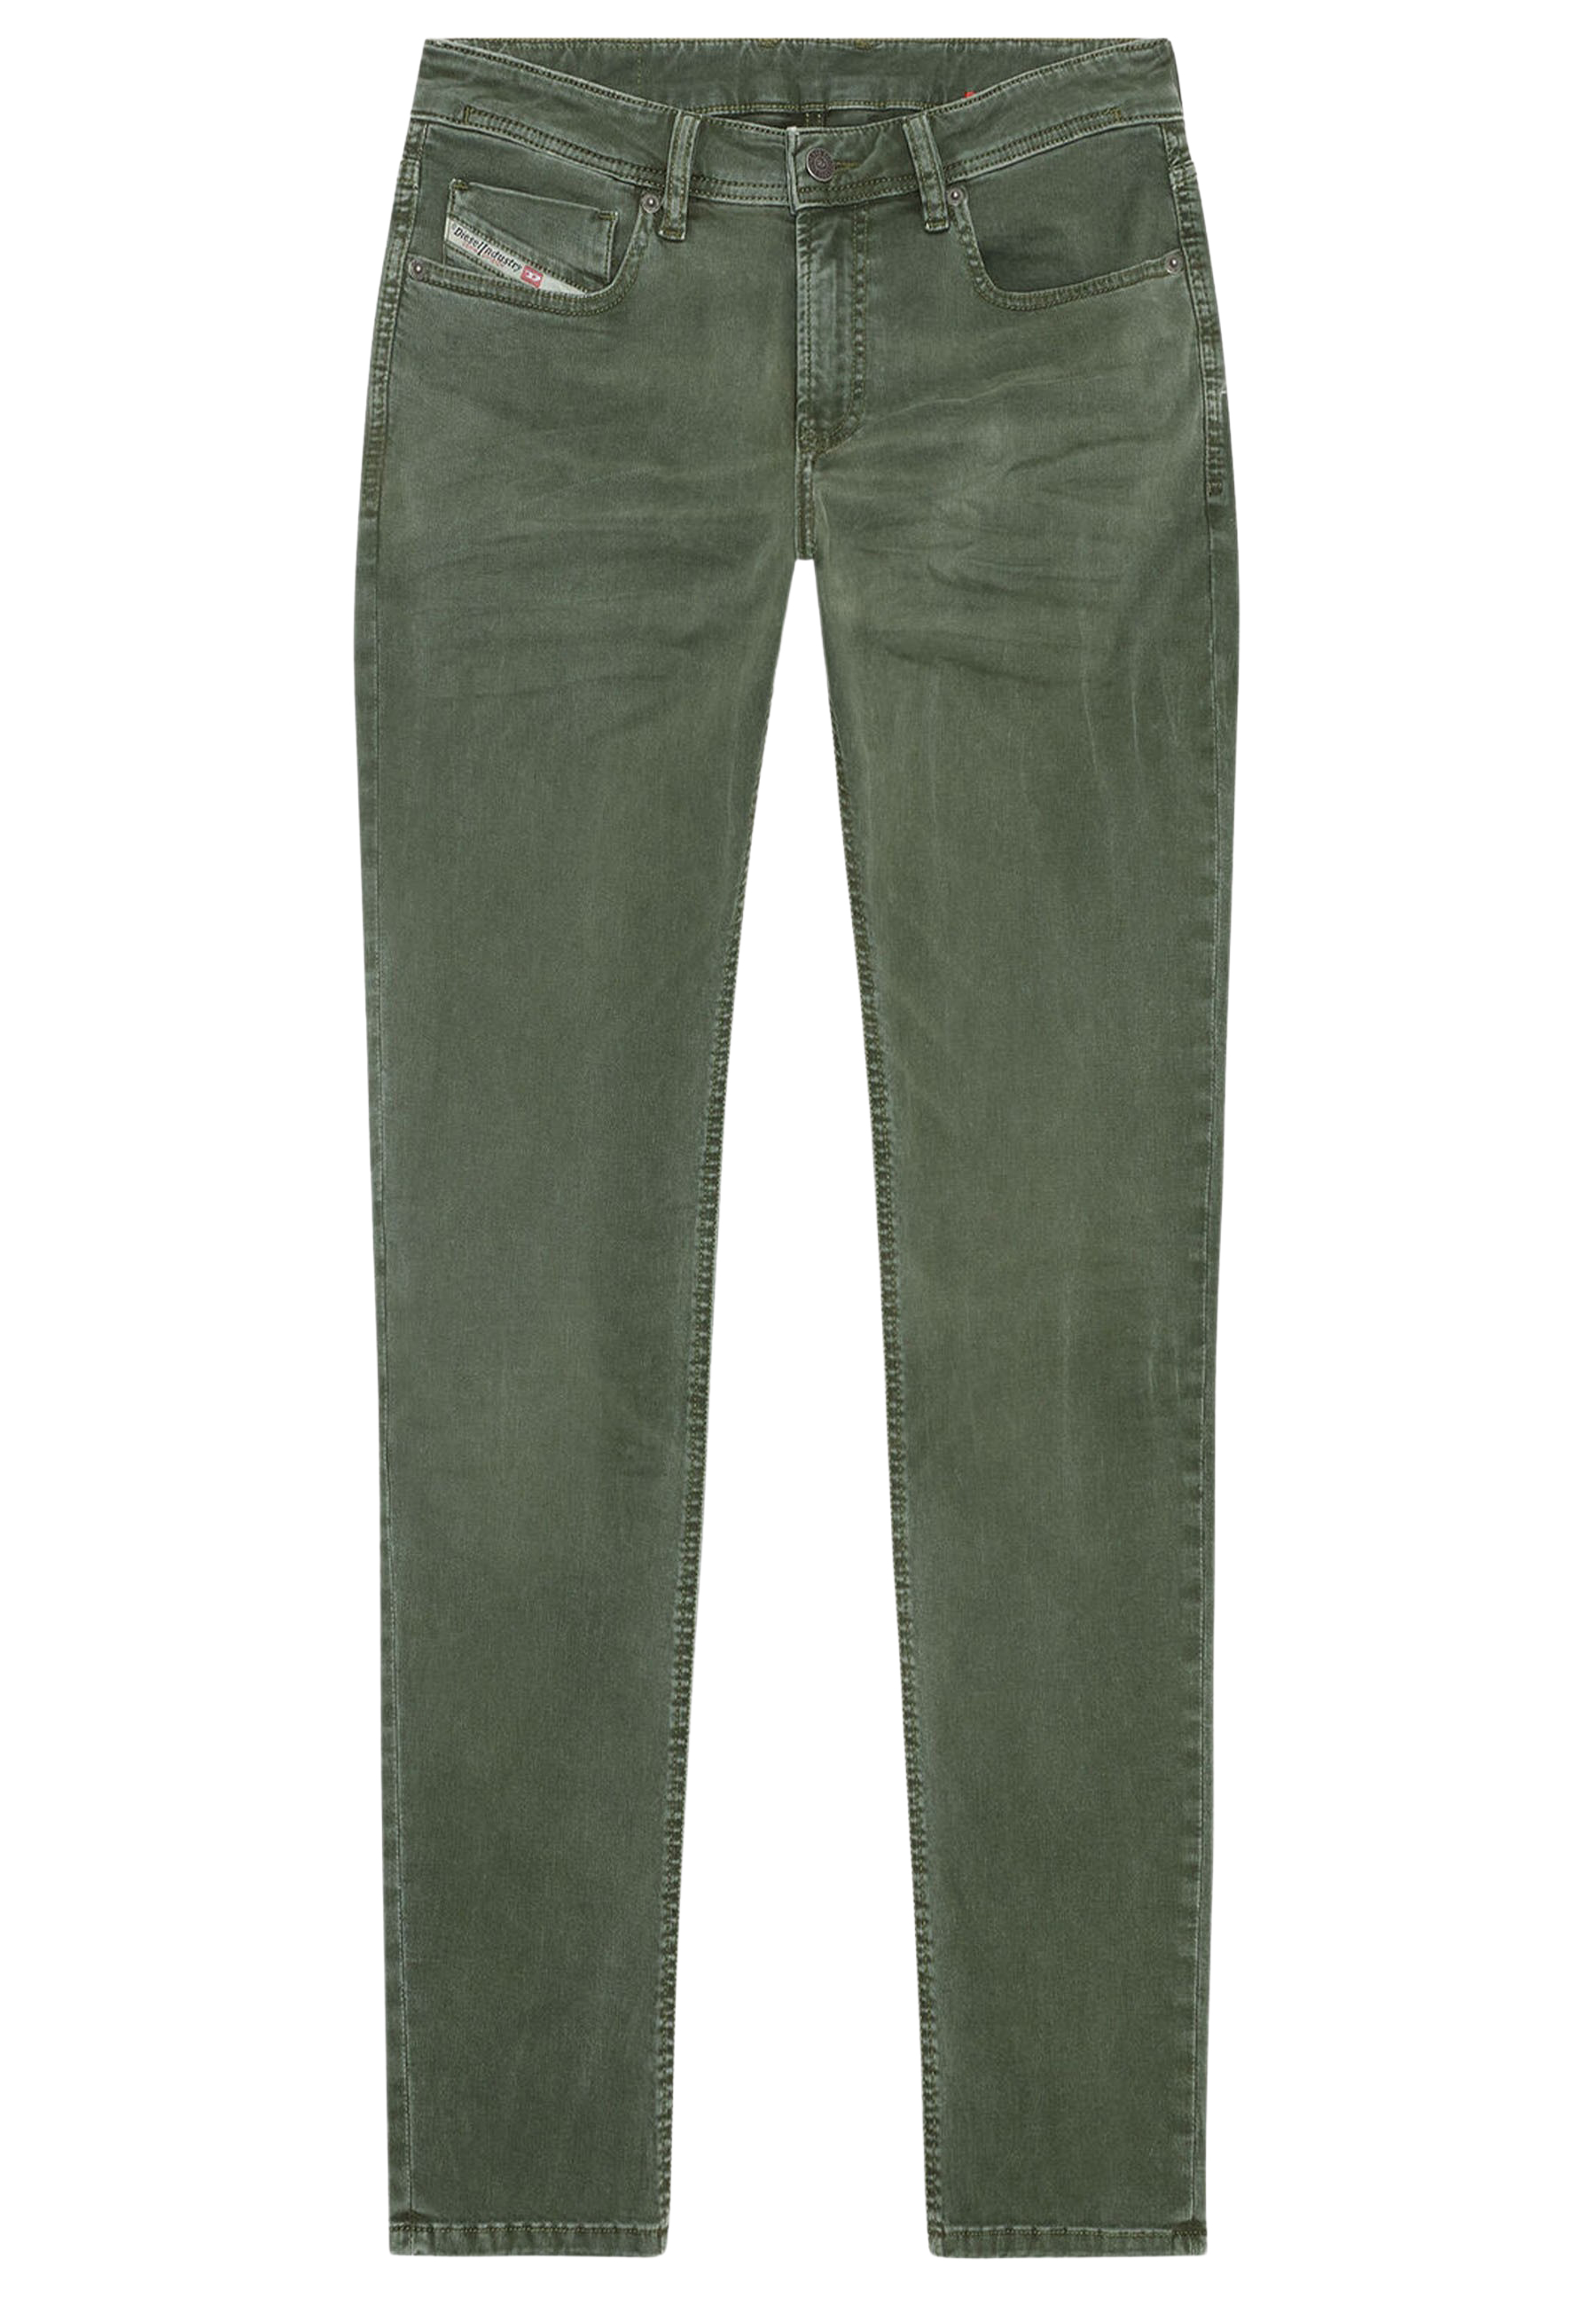 Diesel jeans groen Heren maat 32/32